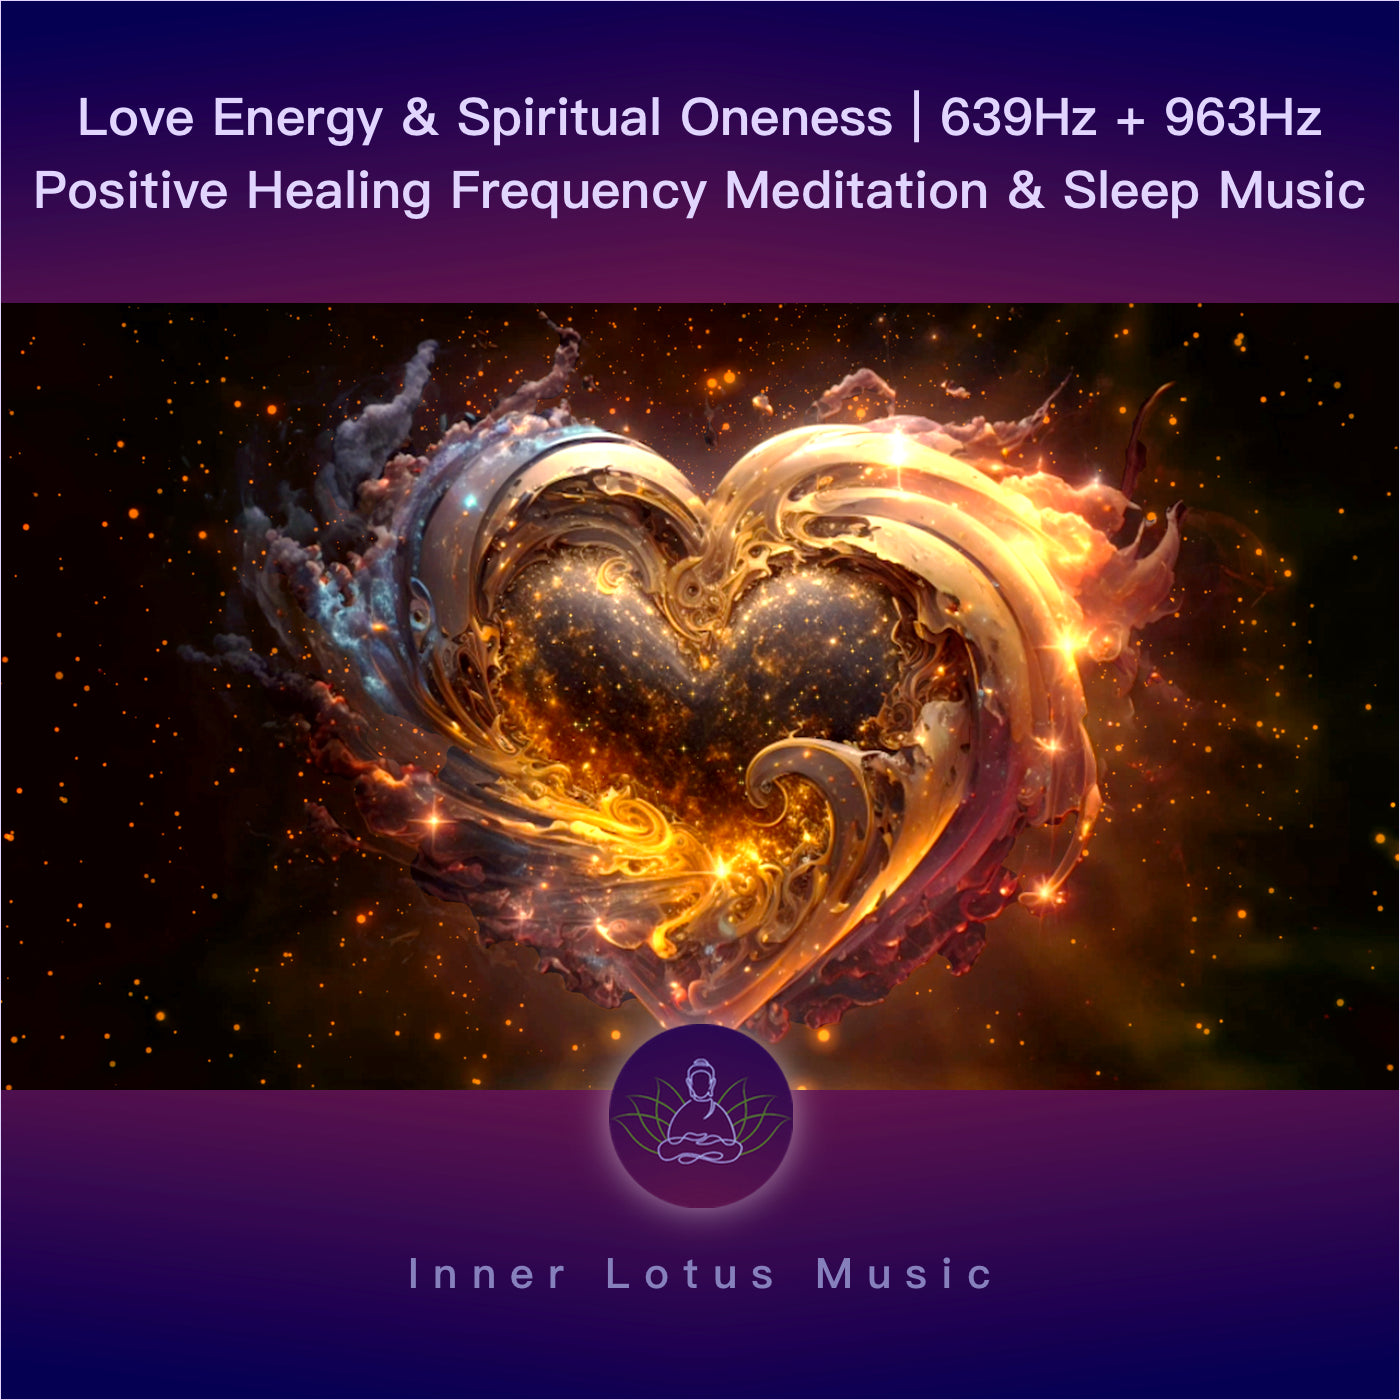 Love Energy & Spiritual Oneness | 639Hz + 963Hz Positive Healing Frequency Meditation & Sleep Music